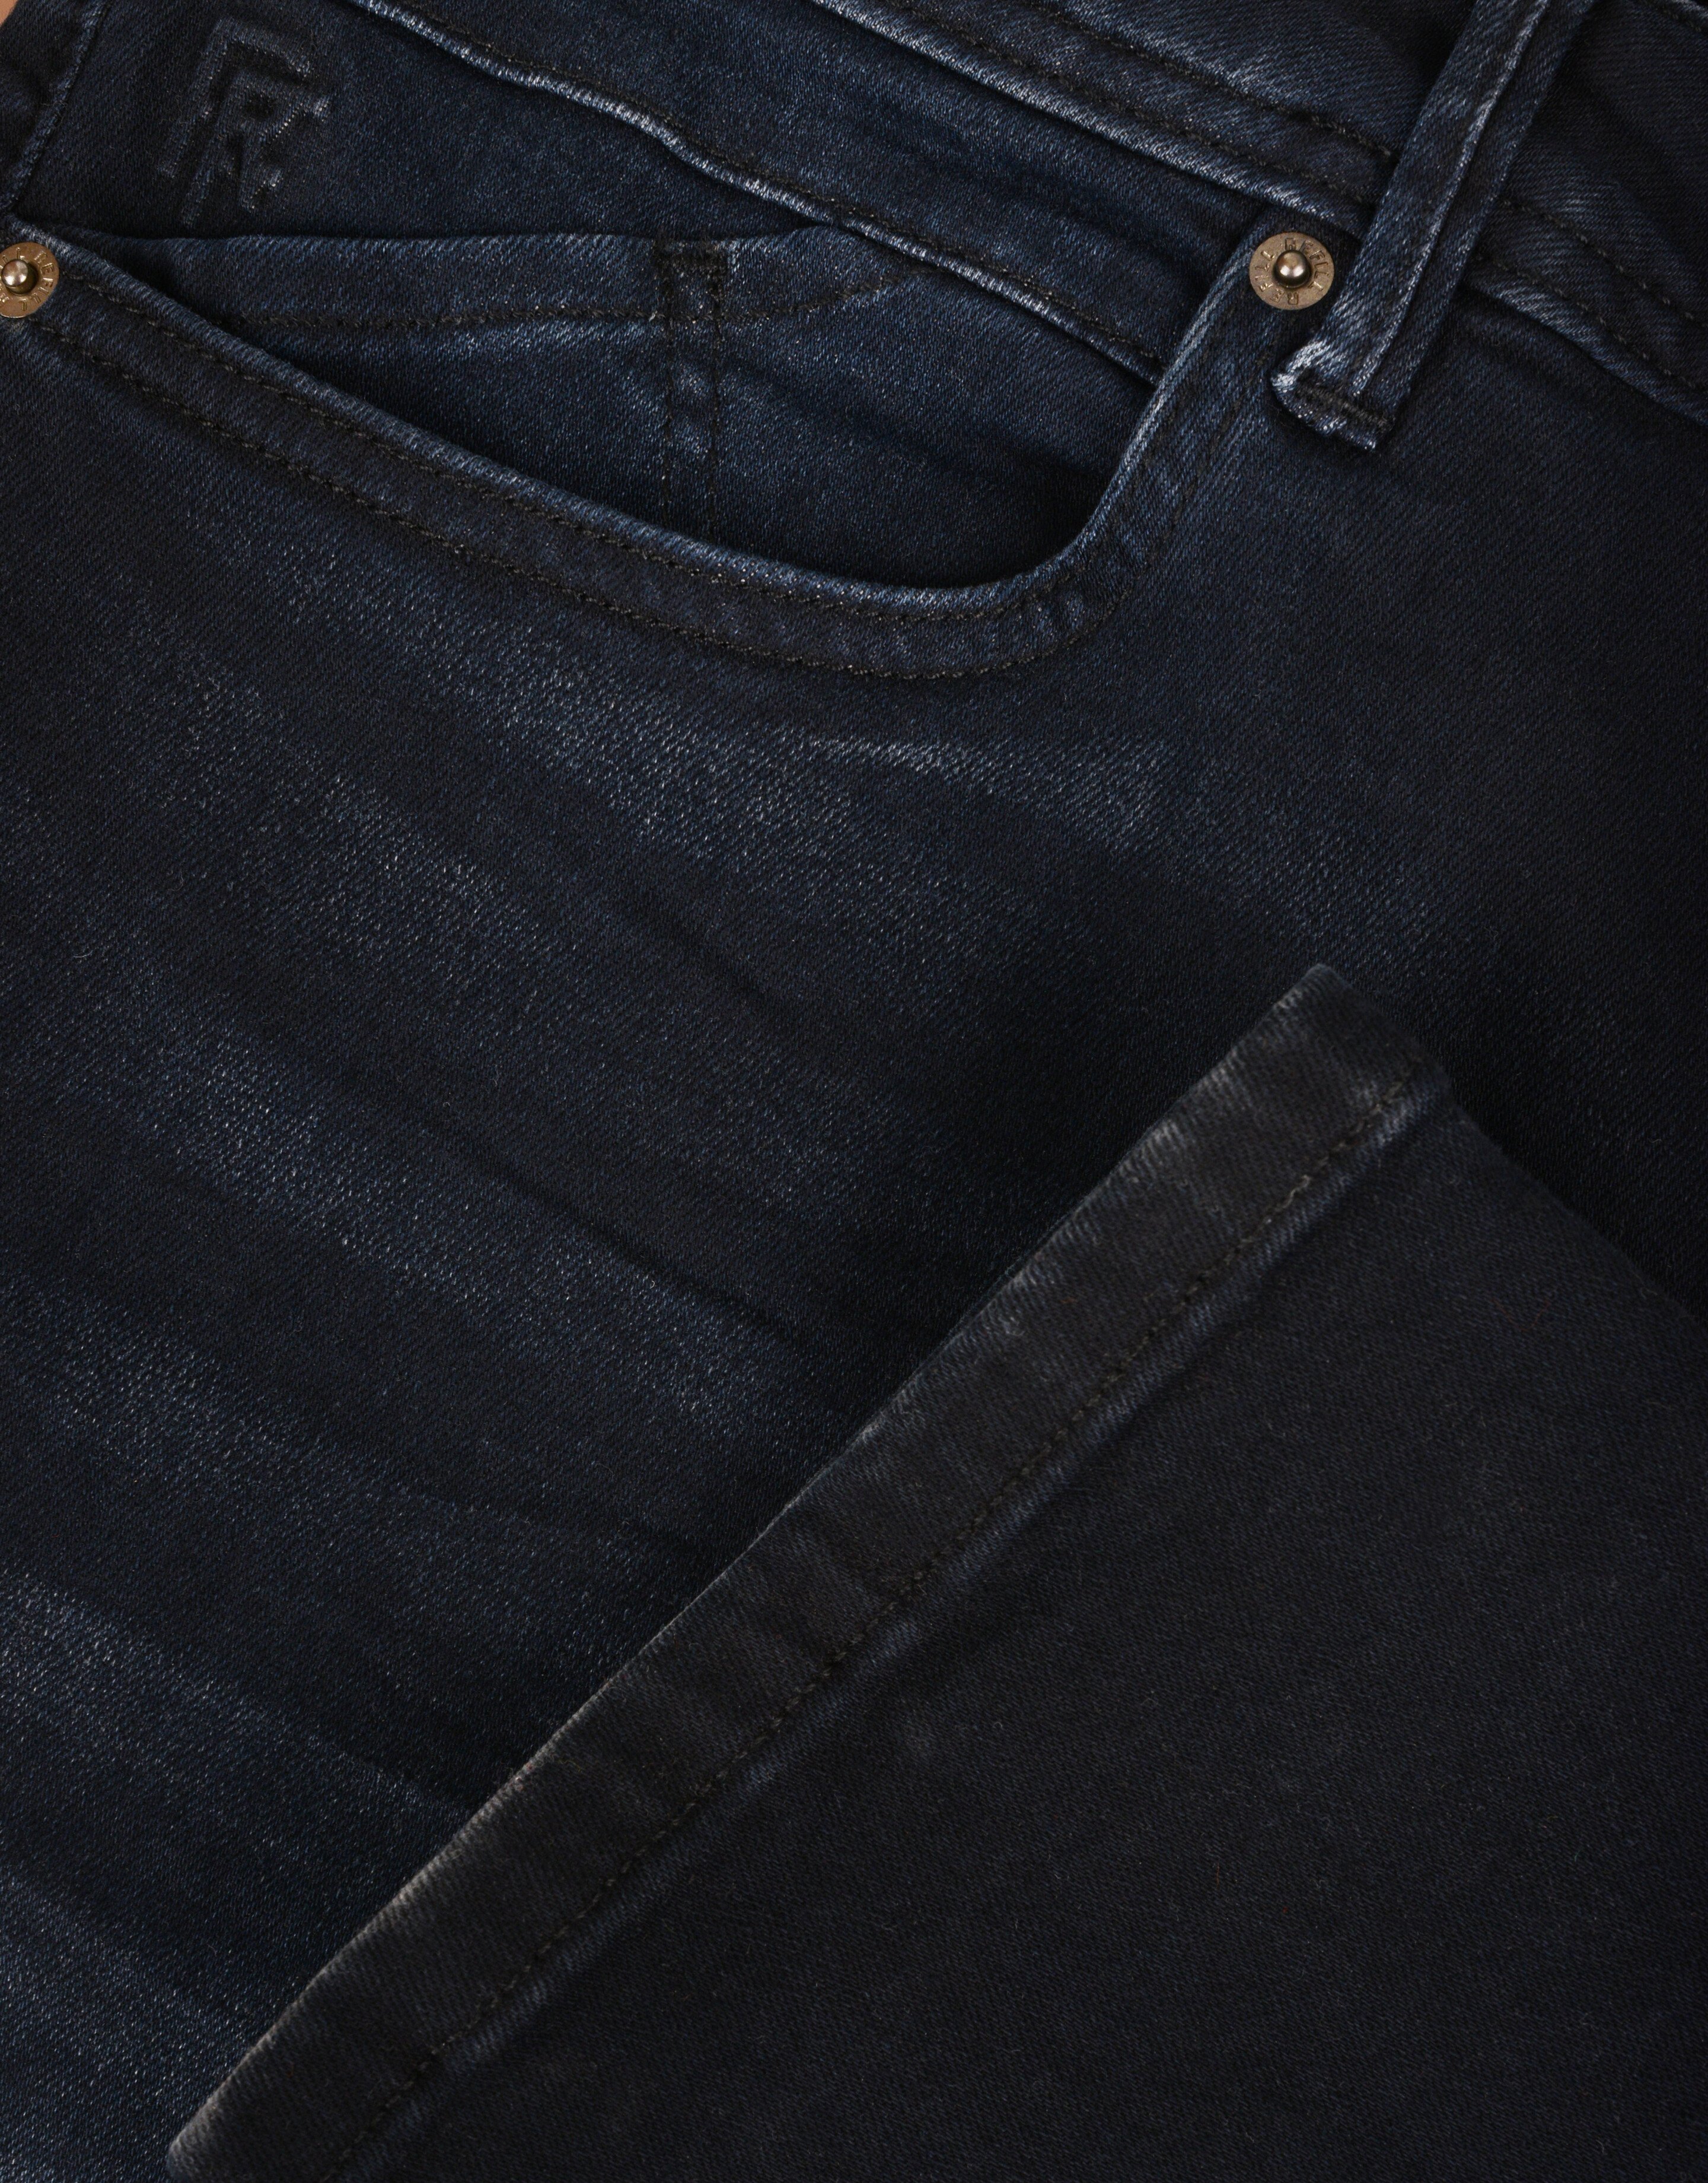 Lewis Straight Blue/Black Jeans L36 Refill